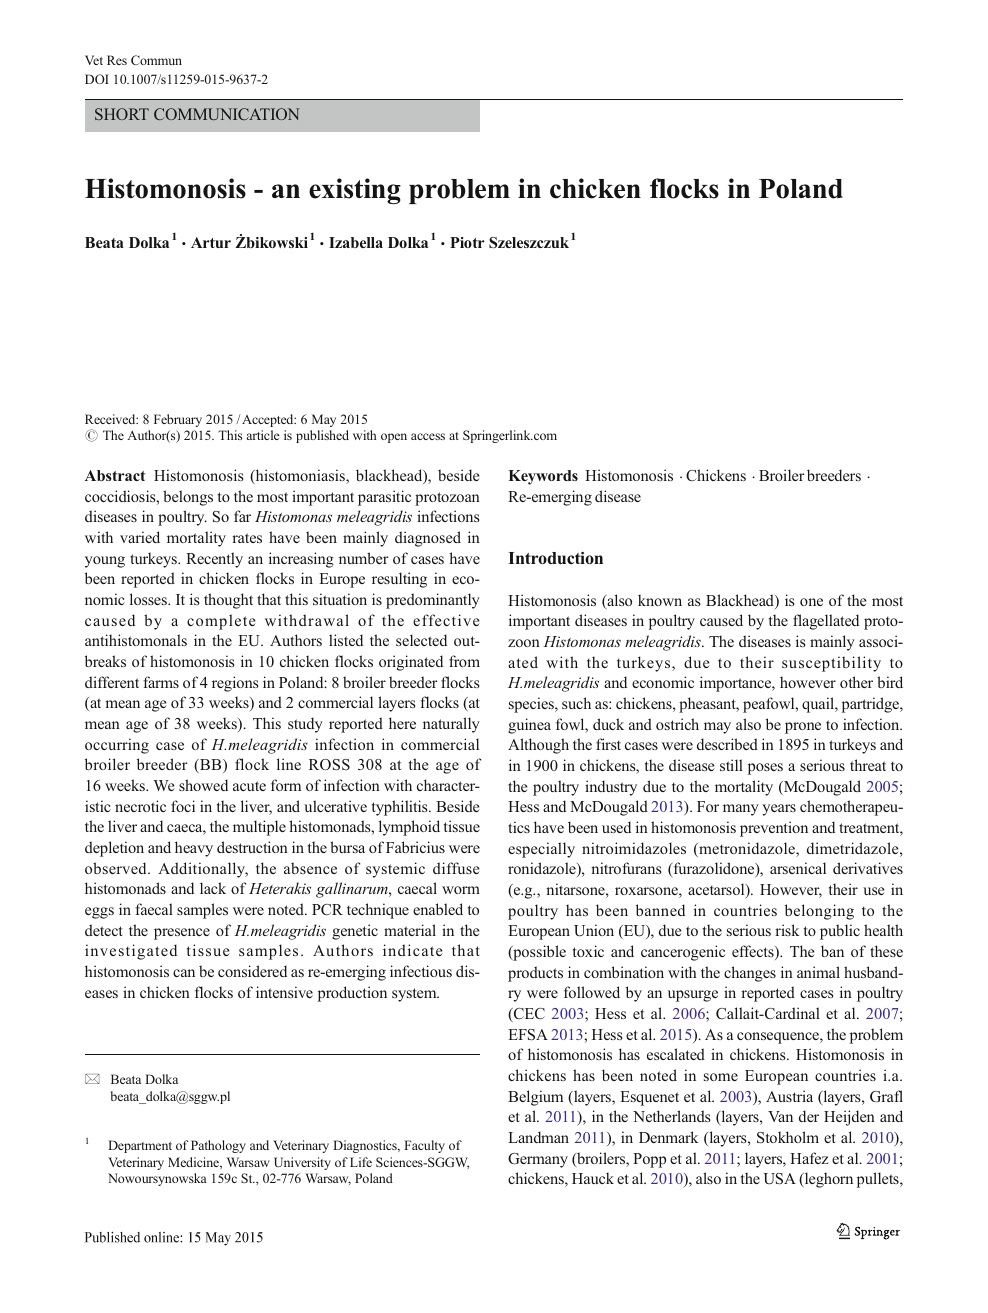 Histomonosis An Existing Problem In Chicken Flocks In Poland